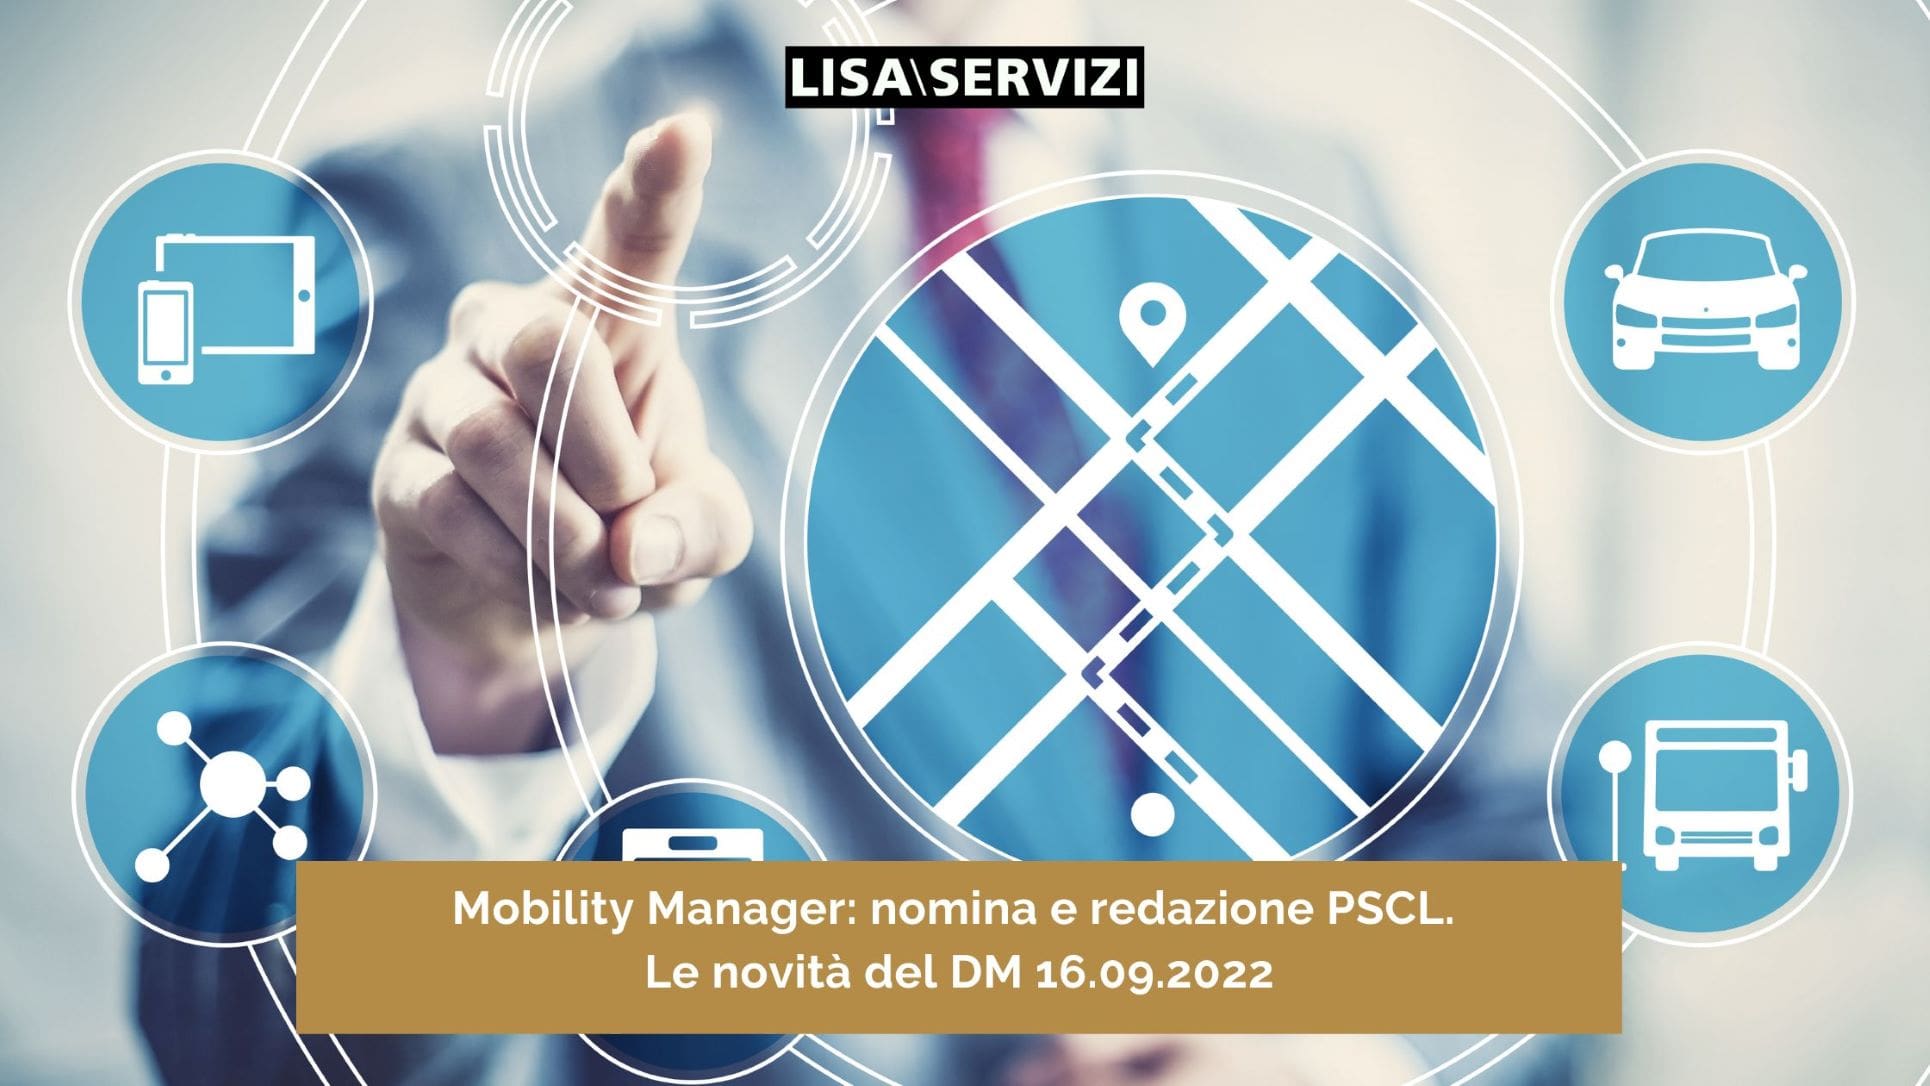 Mobility Manager e PSCL: le novità del DM 16.09.2022 